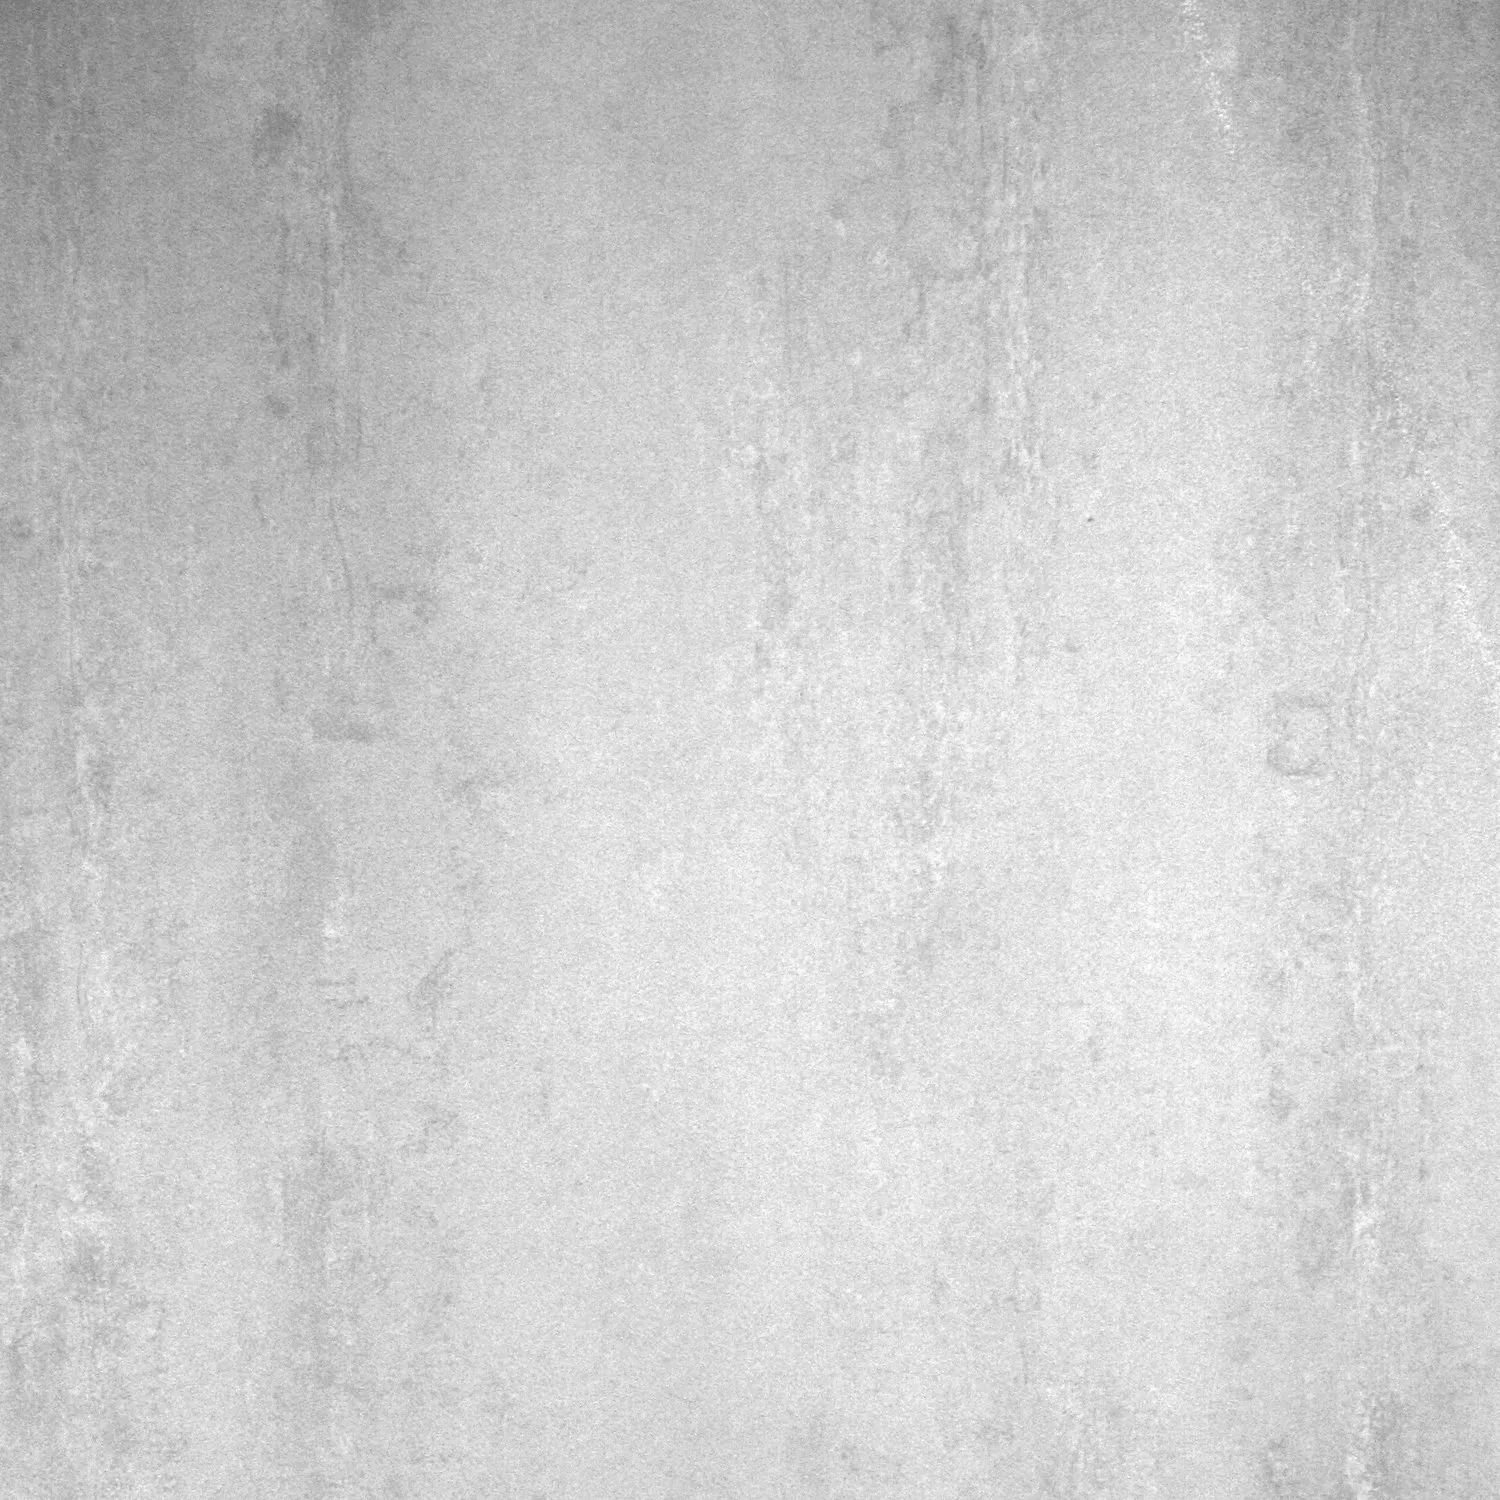 Vzorek Podlahové Dlaždice Madeira Bílá Naleštěná 60x60cm